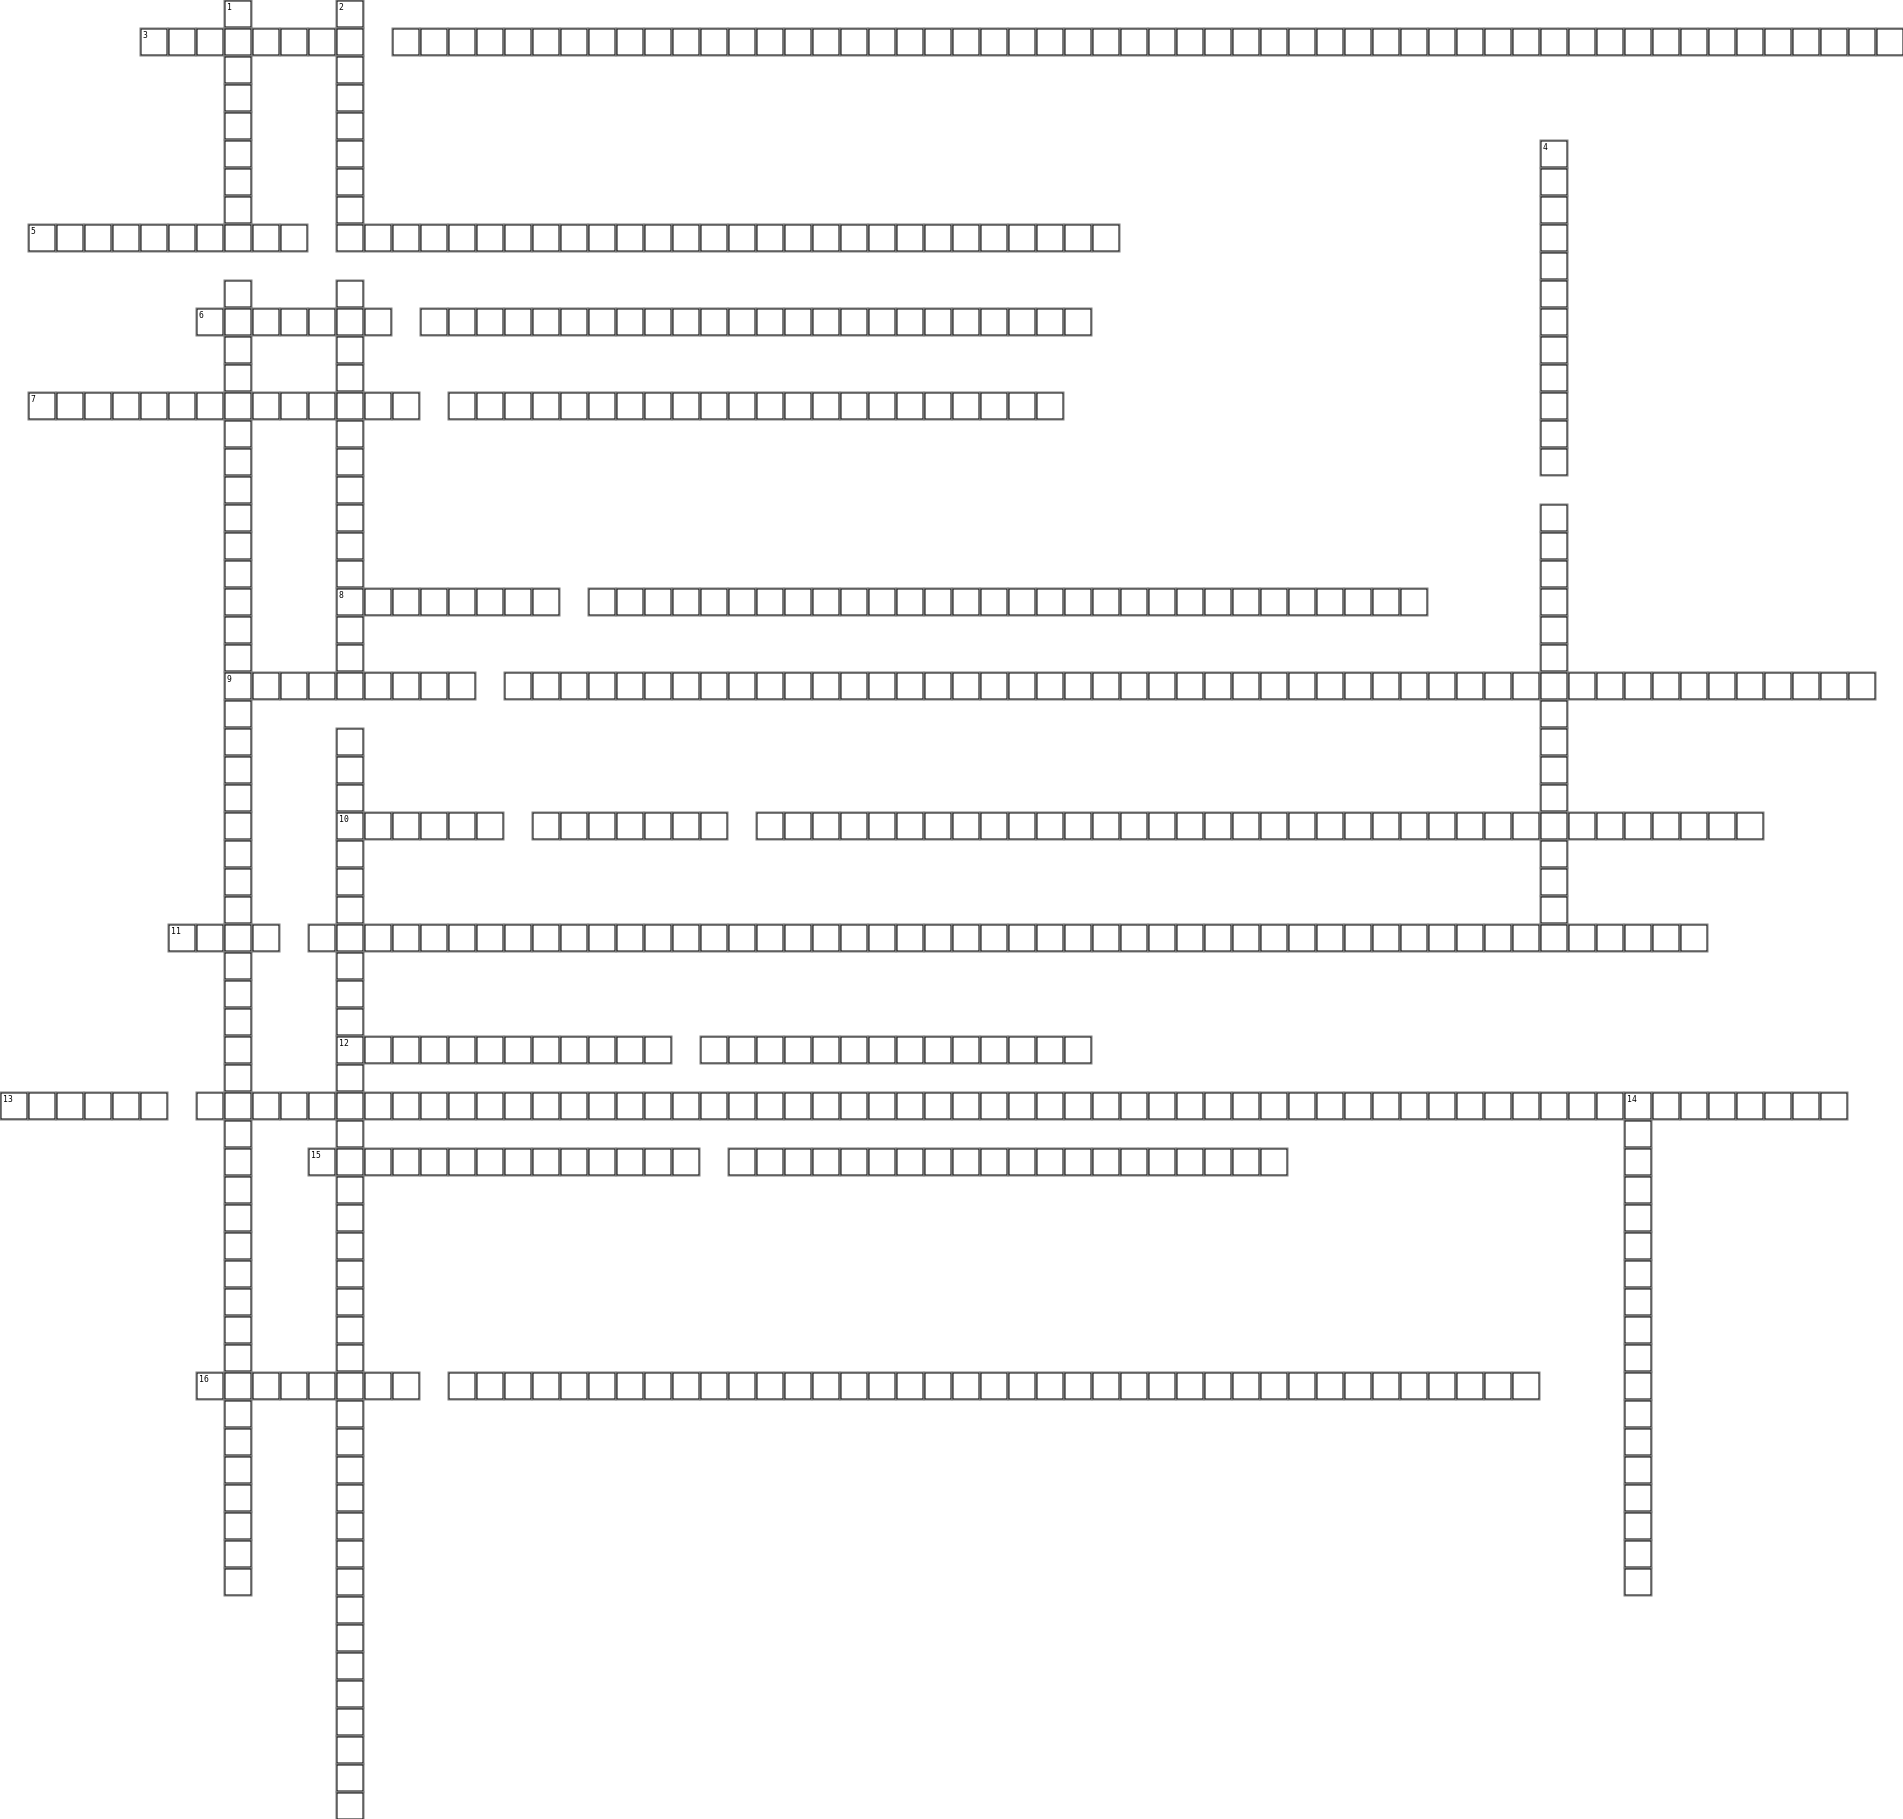 Science - Crossword Crossword Grid Image